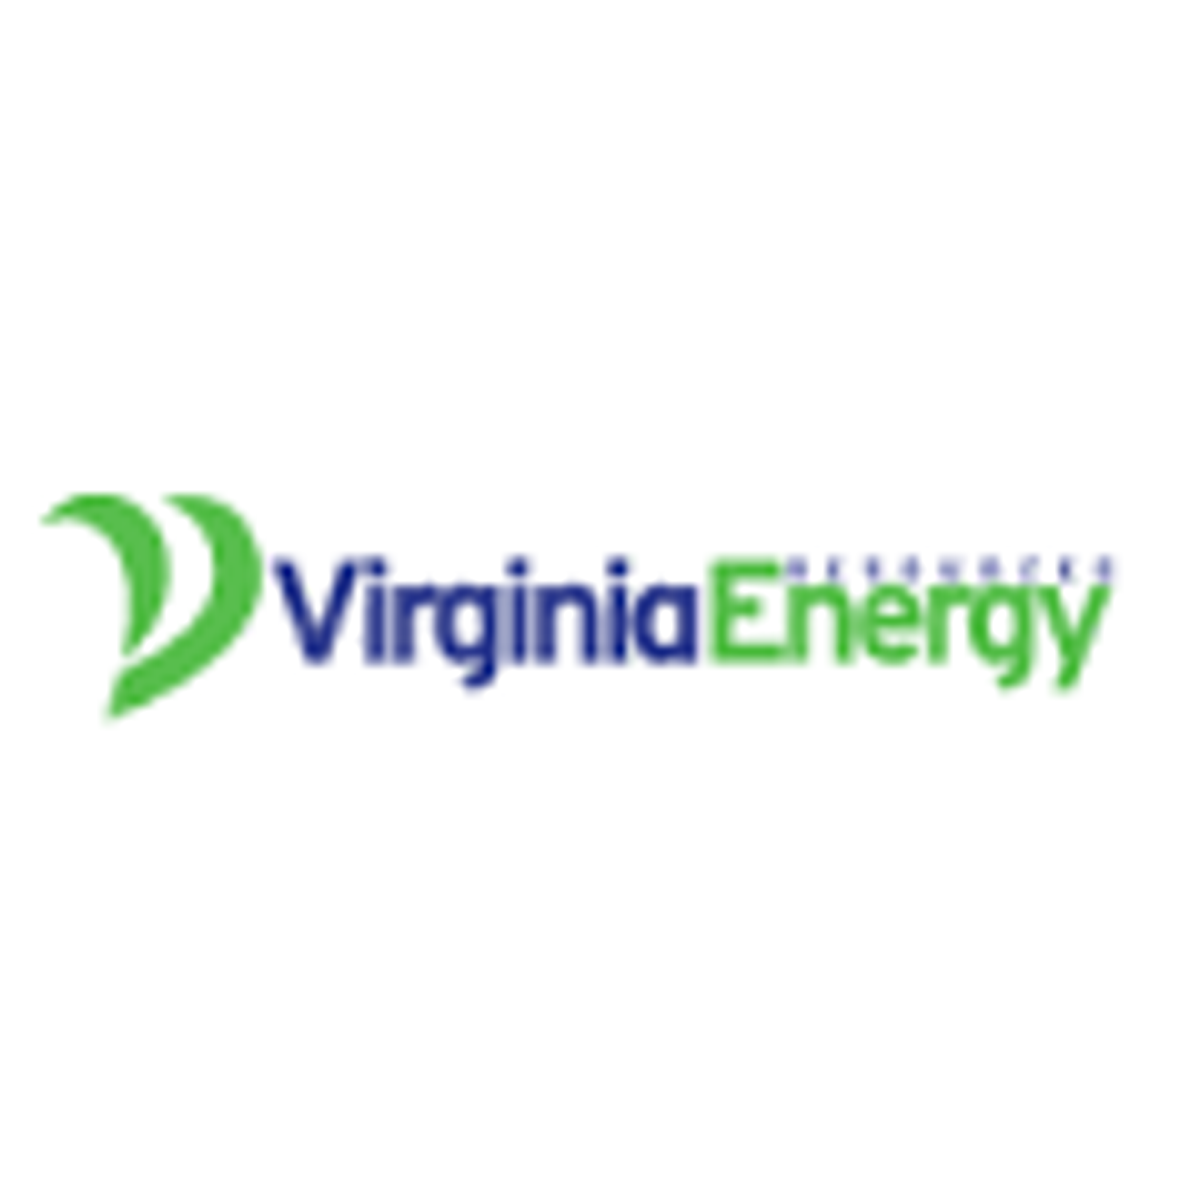 Consolidated Uranium Announces Acquisition of Virginia Energy Resources, Securing the Largest Undeveloped Uranium Deposit in the U.S.